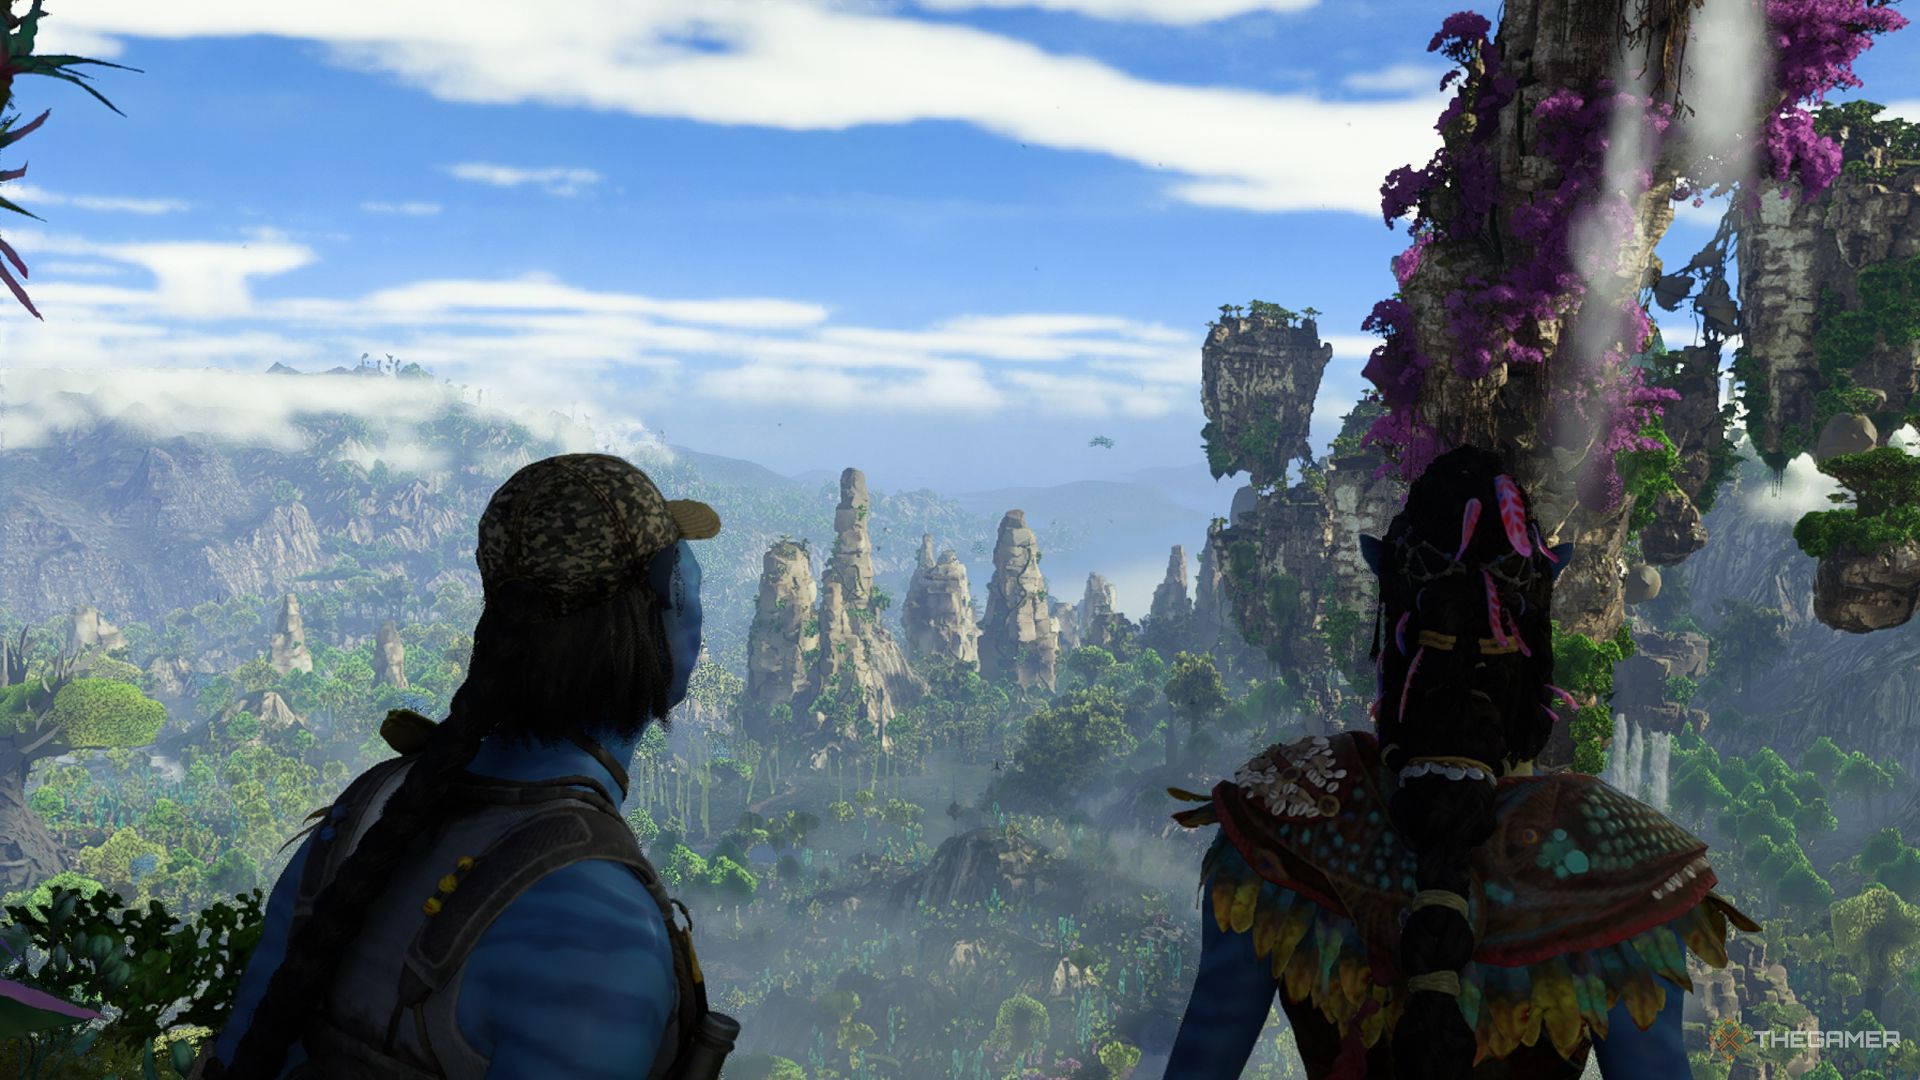 Teylan and Ri'nela overlooking the forest Avatar Frontiers of Pandora